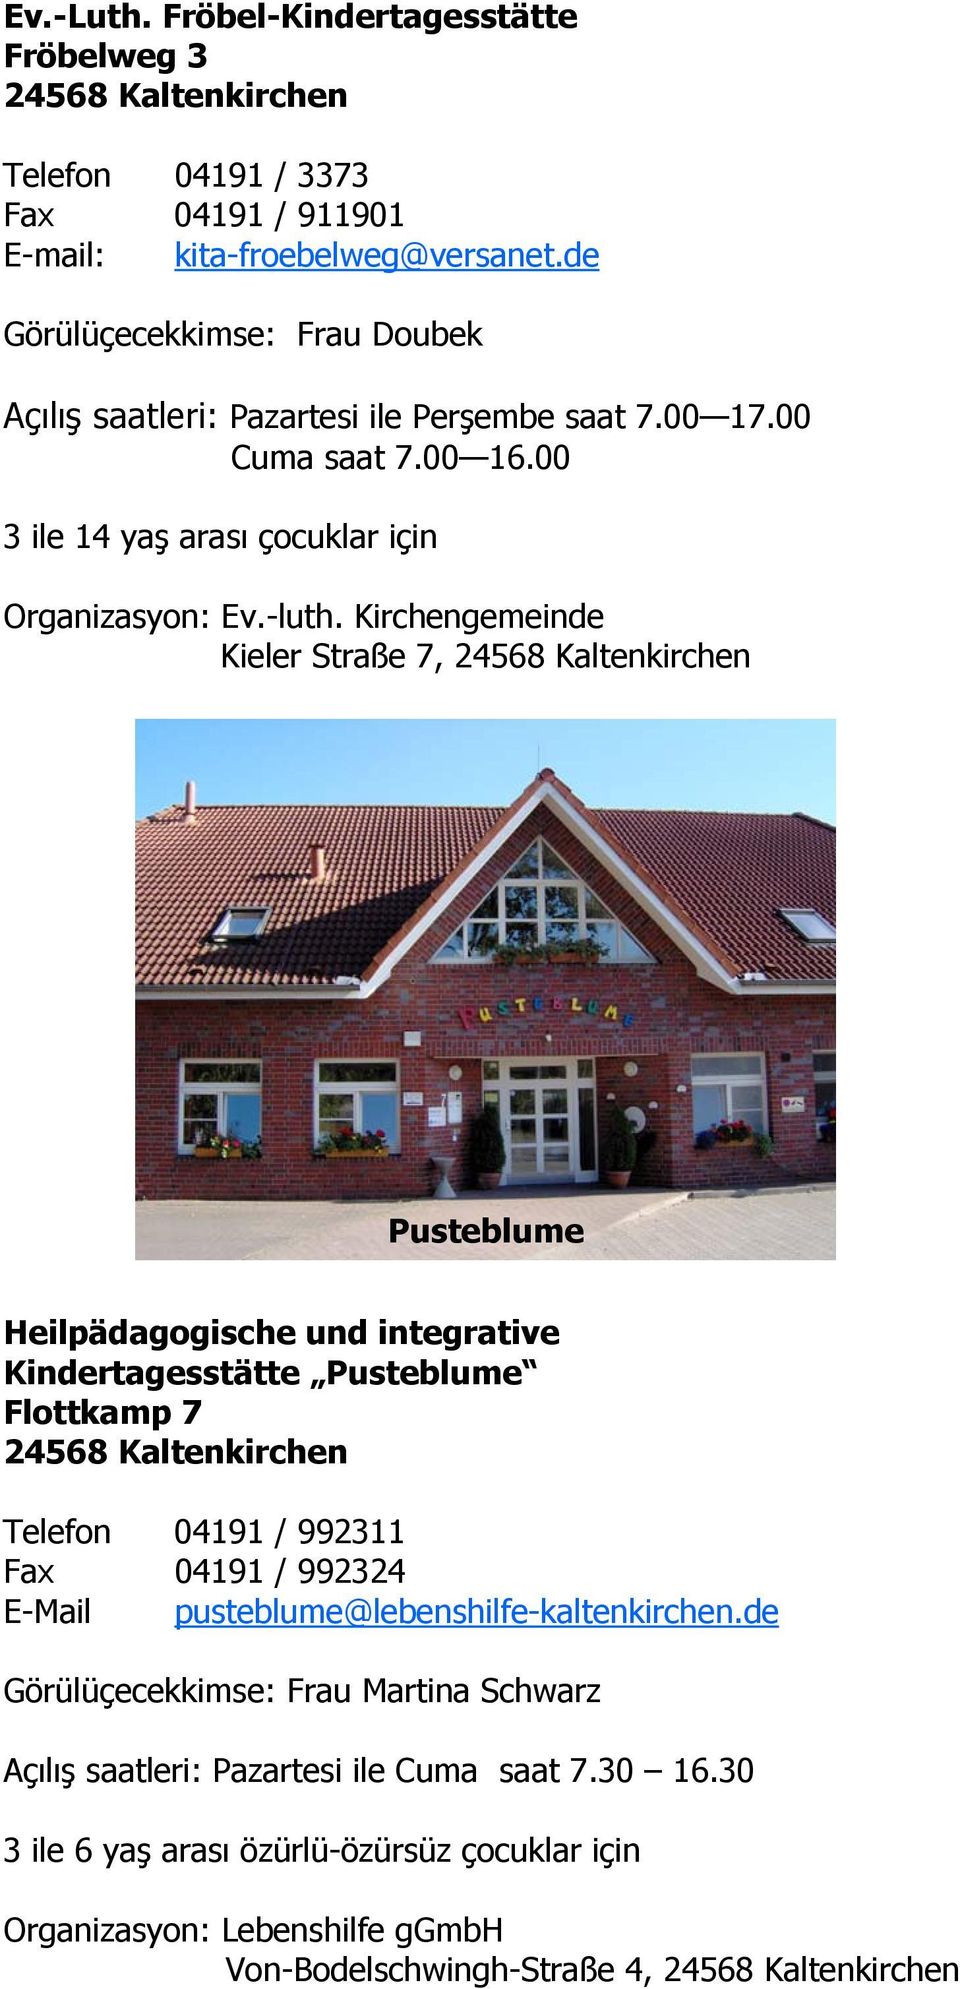 Kirchengemeinde Kieler Straße 7, Pusteblume Heilpädagogische und integrative Kindertagesstätte Pusteblume Flottkamp 7 Telefon 04191 / 992311 Fax 04191 / 992324 E-Mail